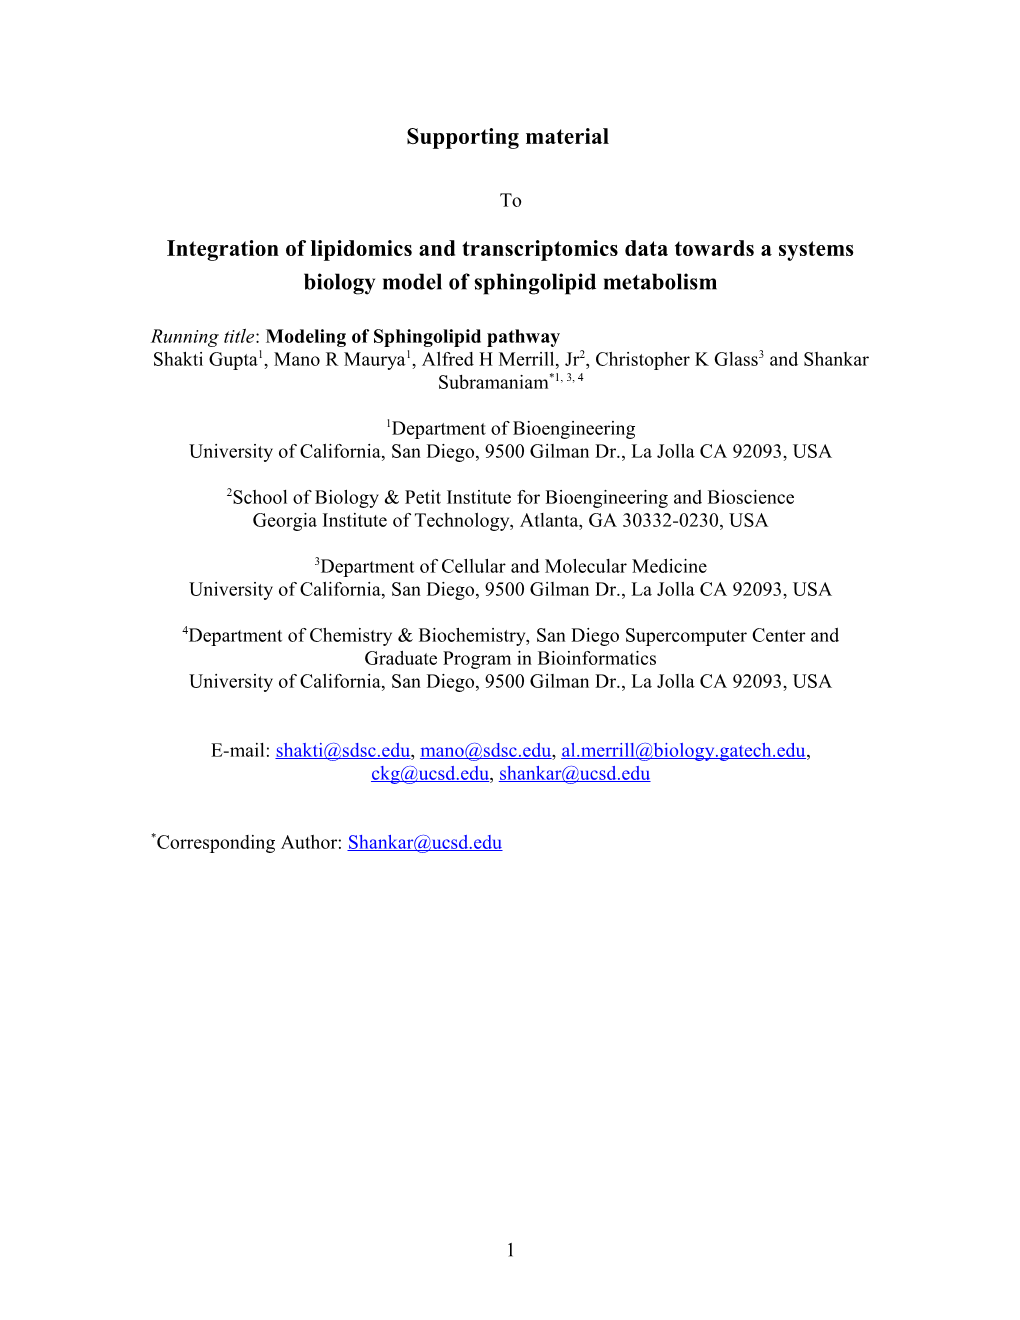 Integration of Lipidomics and Transcriptomics Data Towards a Systems Biology Model Of